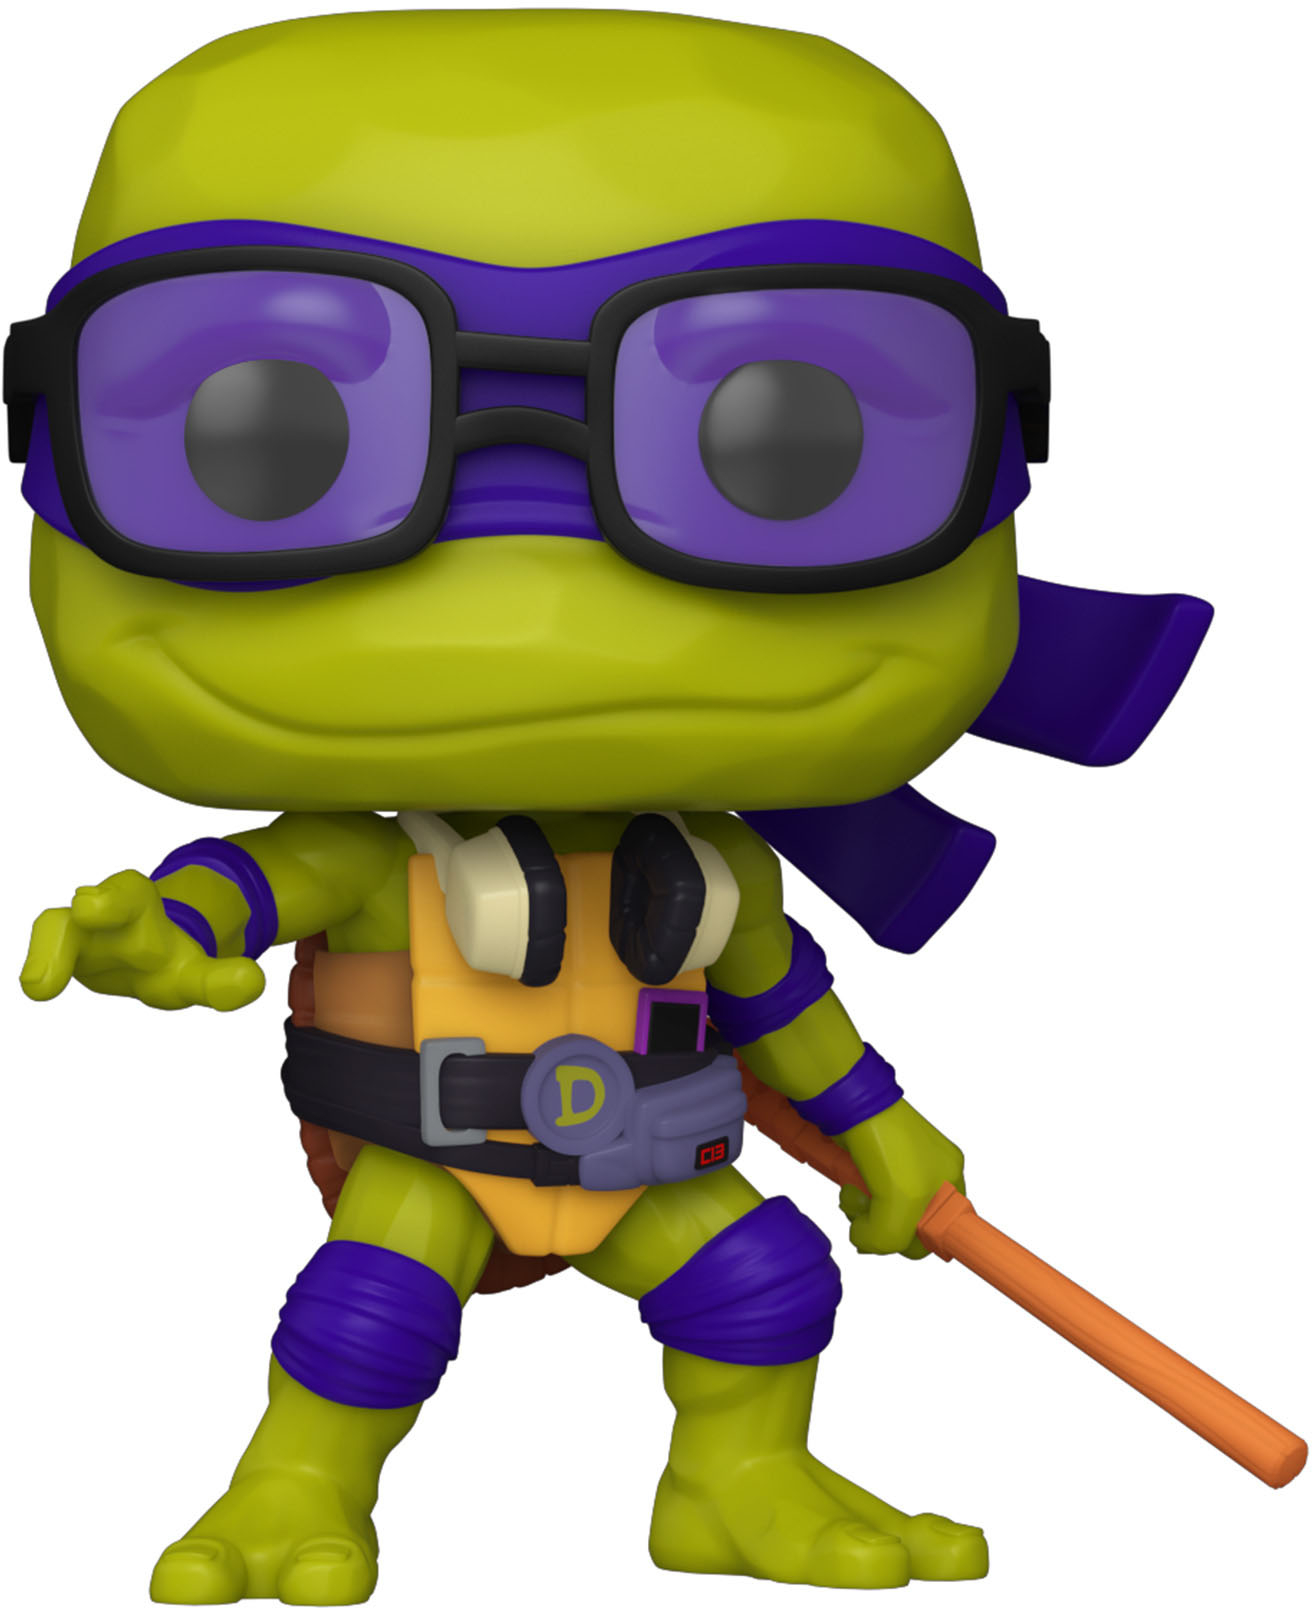 New Teenage Mutant Ninja Turtles Funko Bitty Pops Are Up For